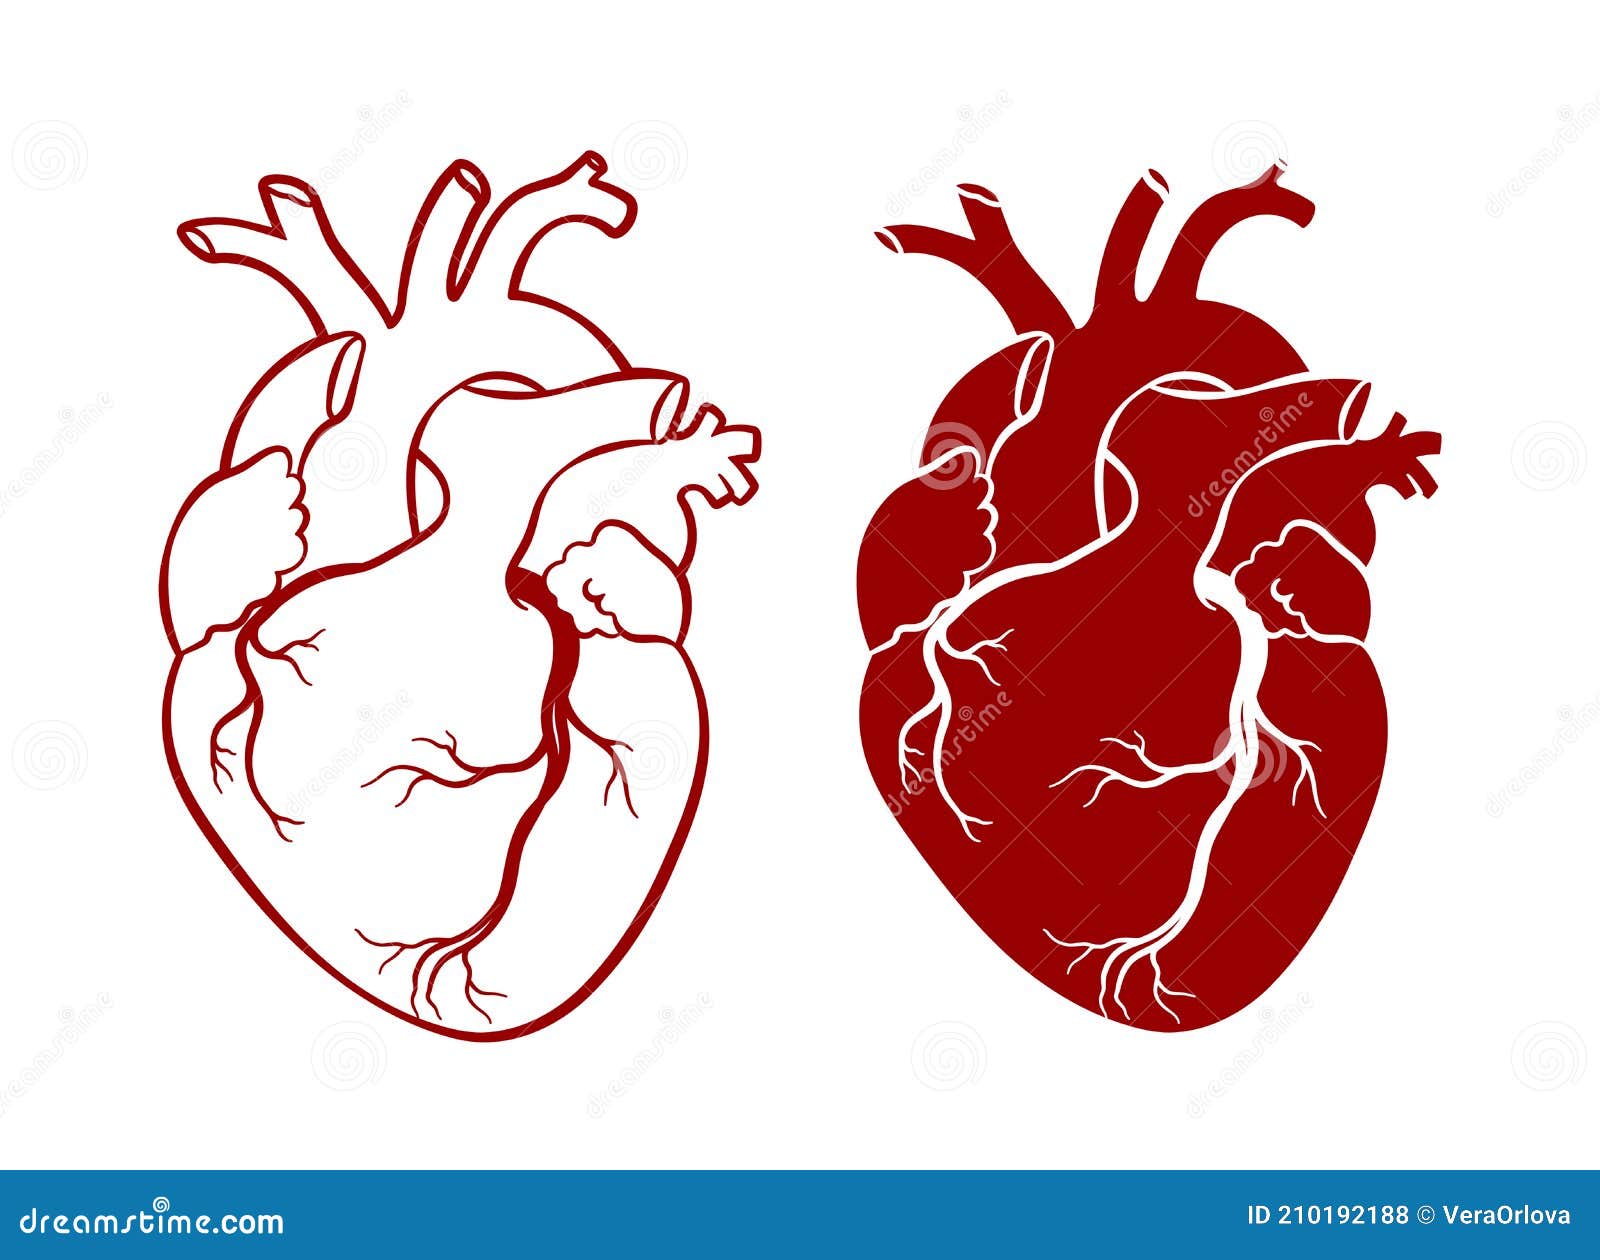 human heart. anatomical realistic heart, line art,  